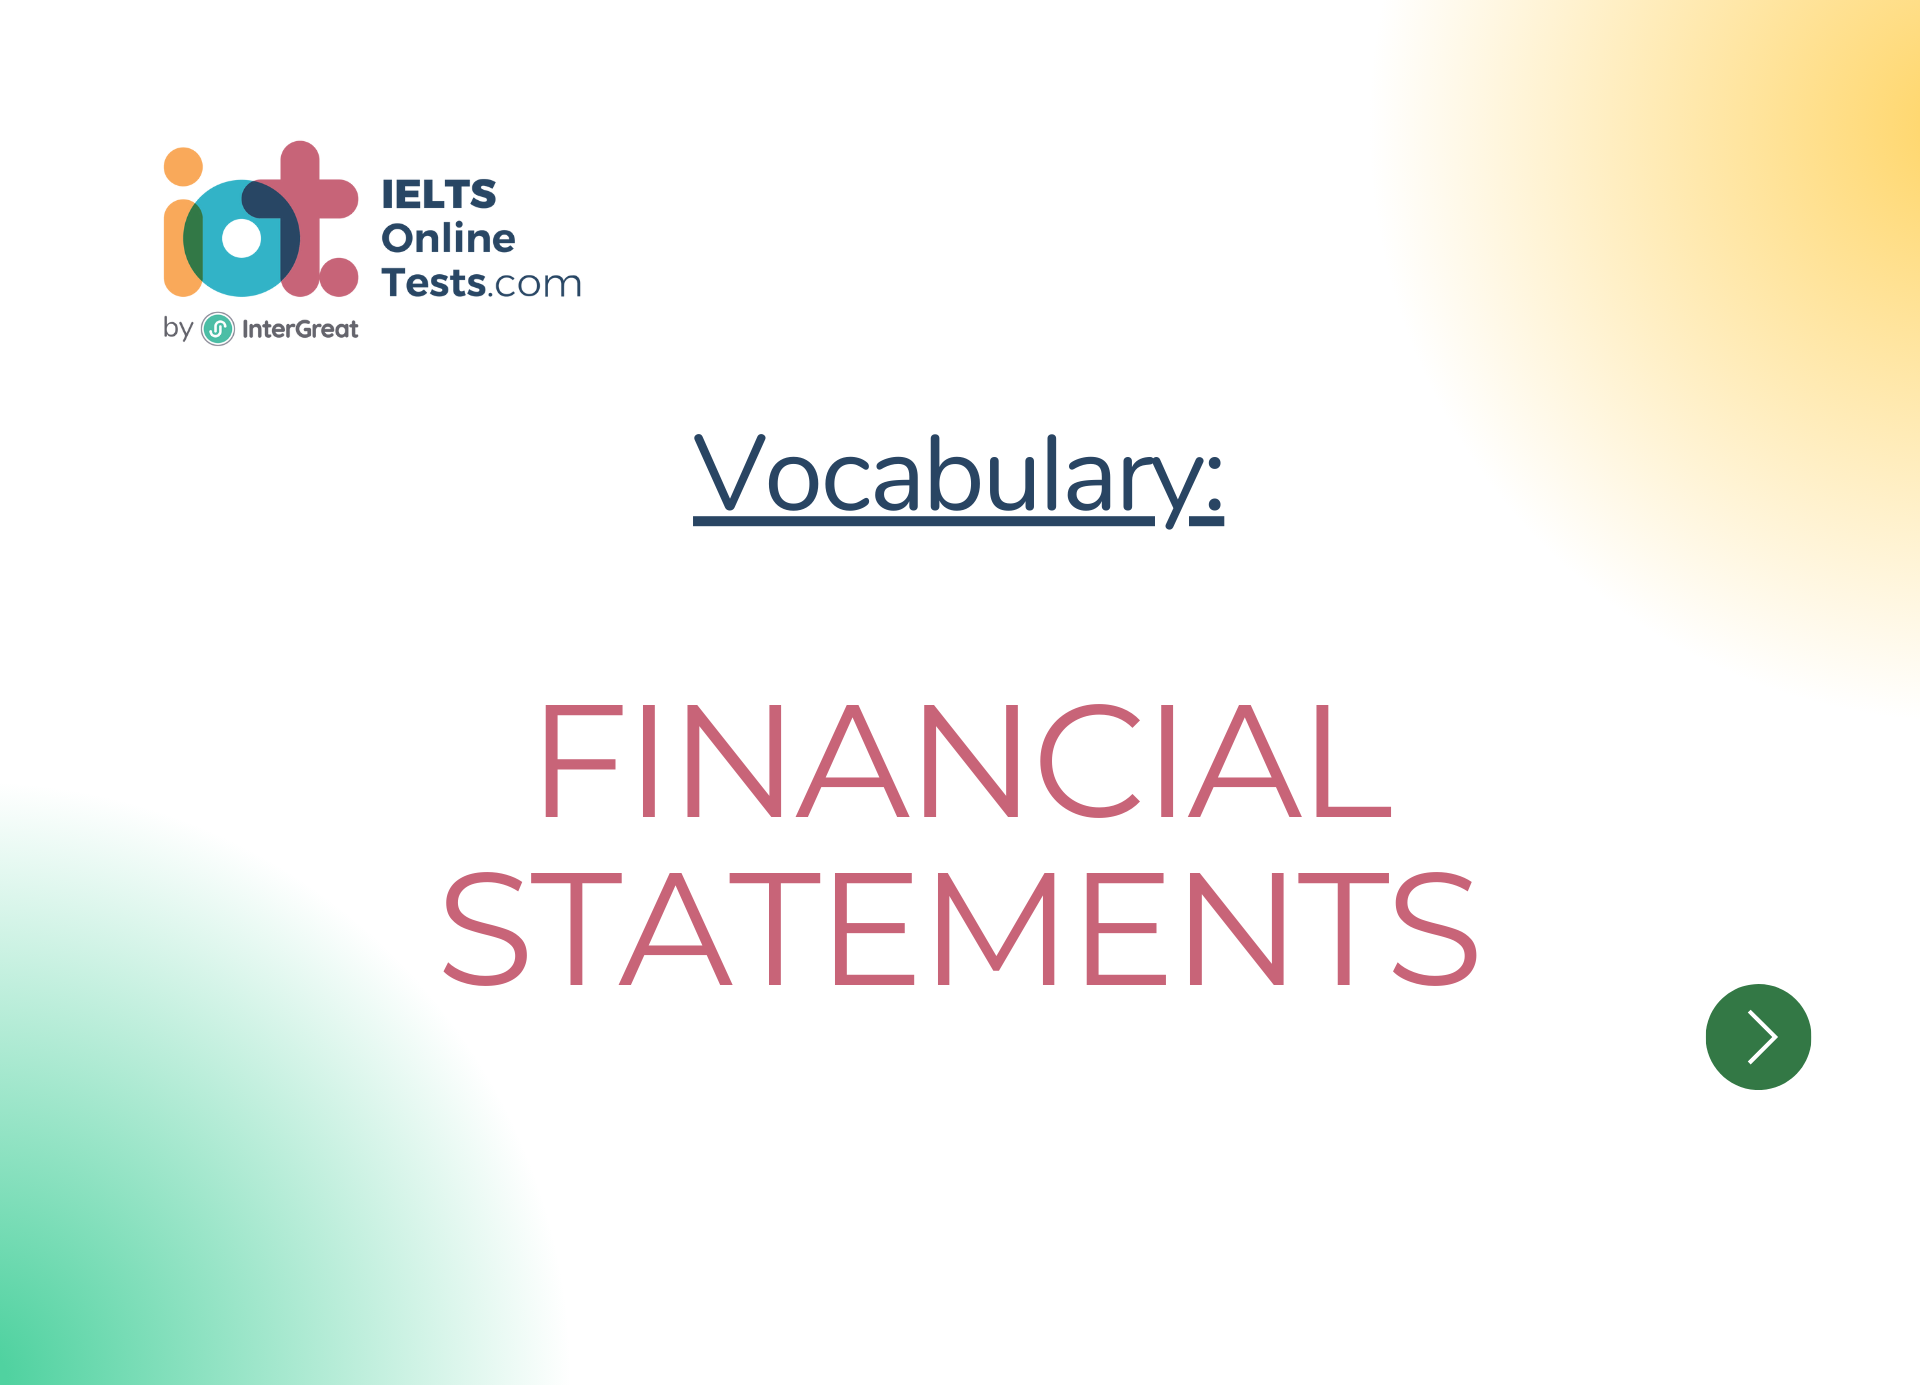 Financial statements